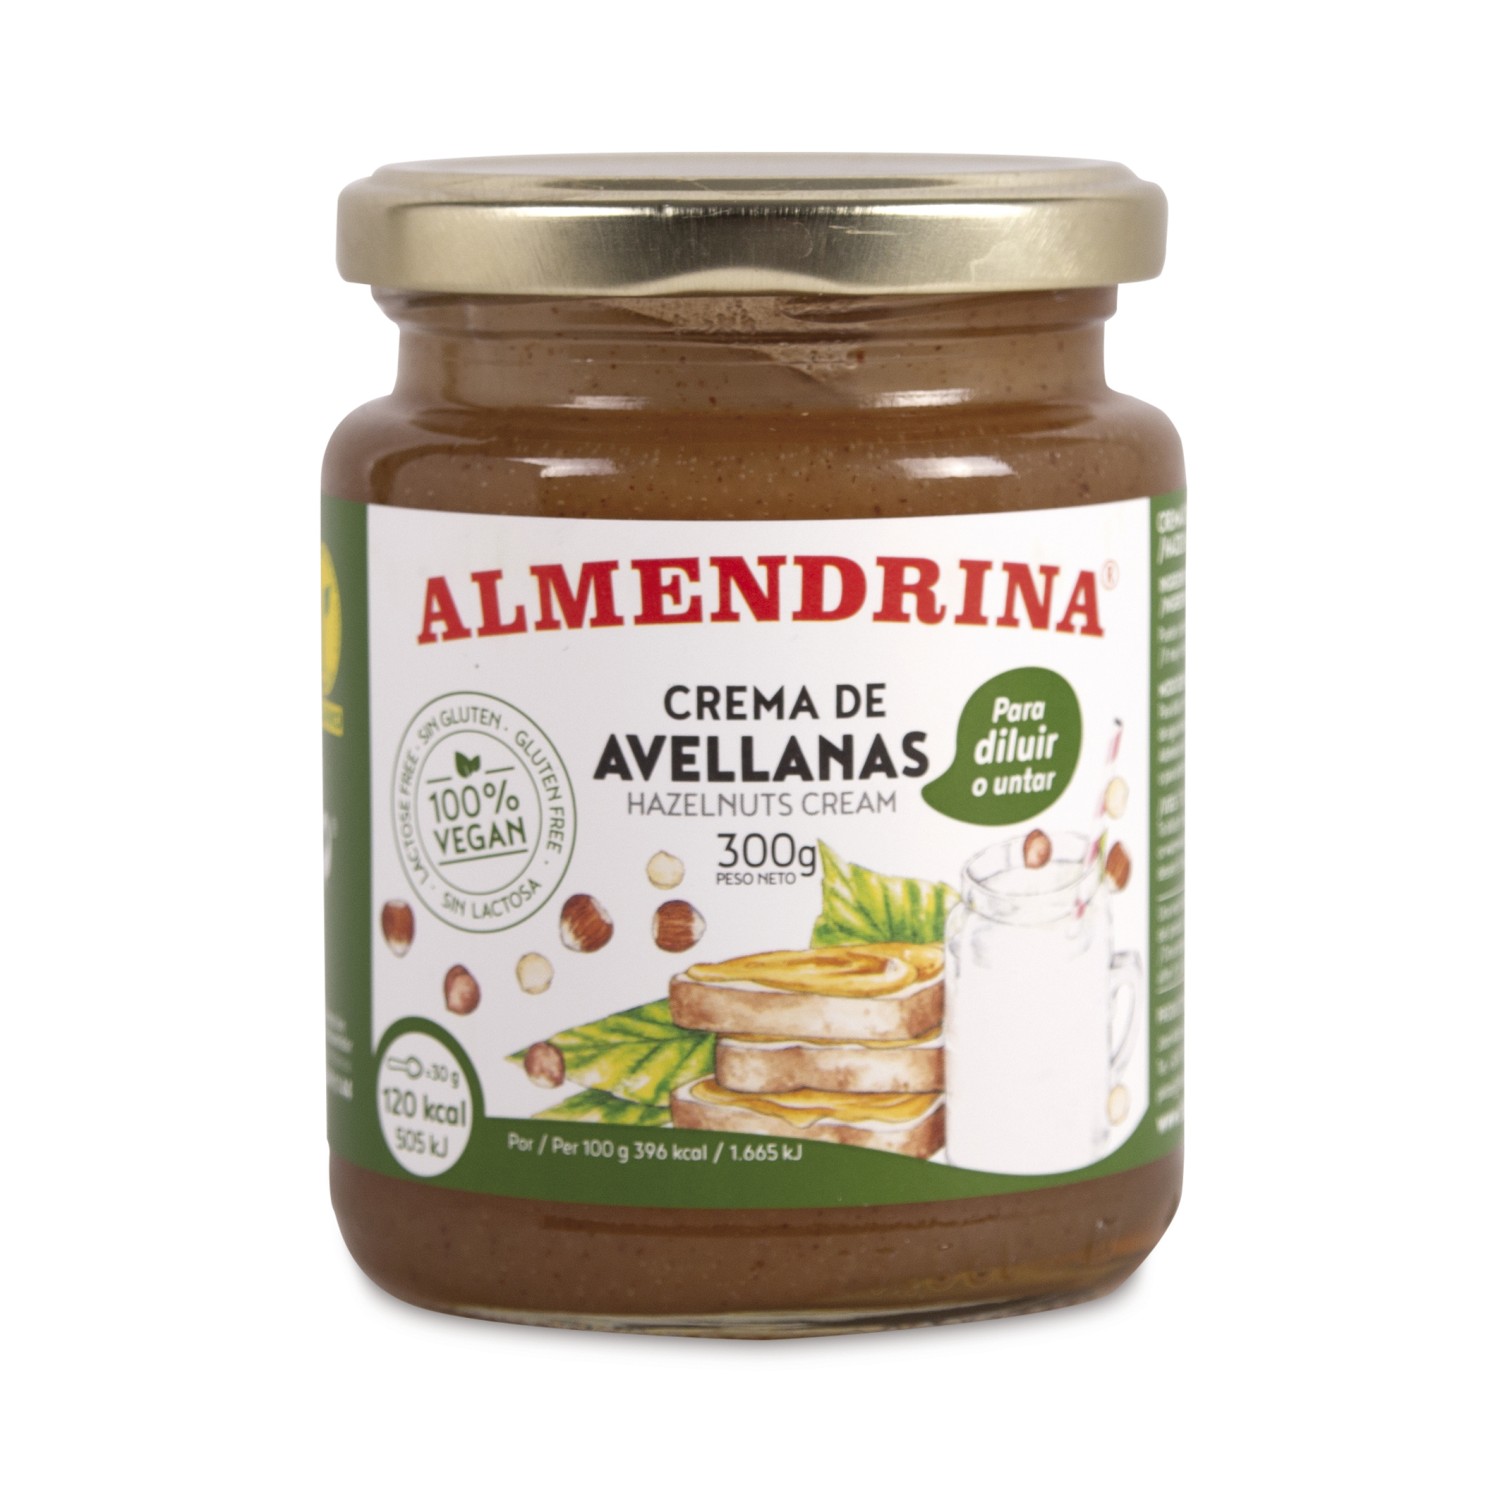 Crema de Avellanas Almendrina 300g